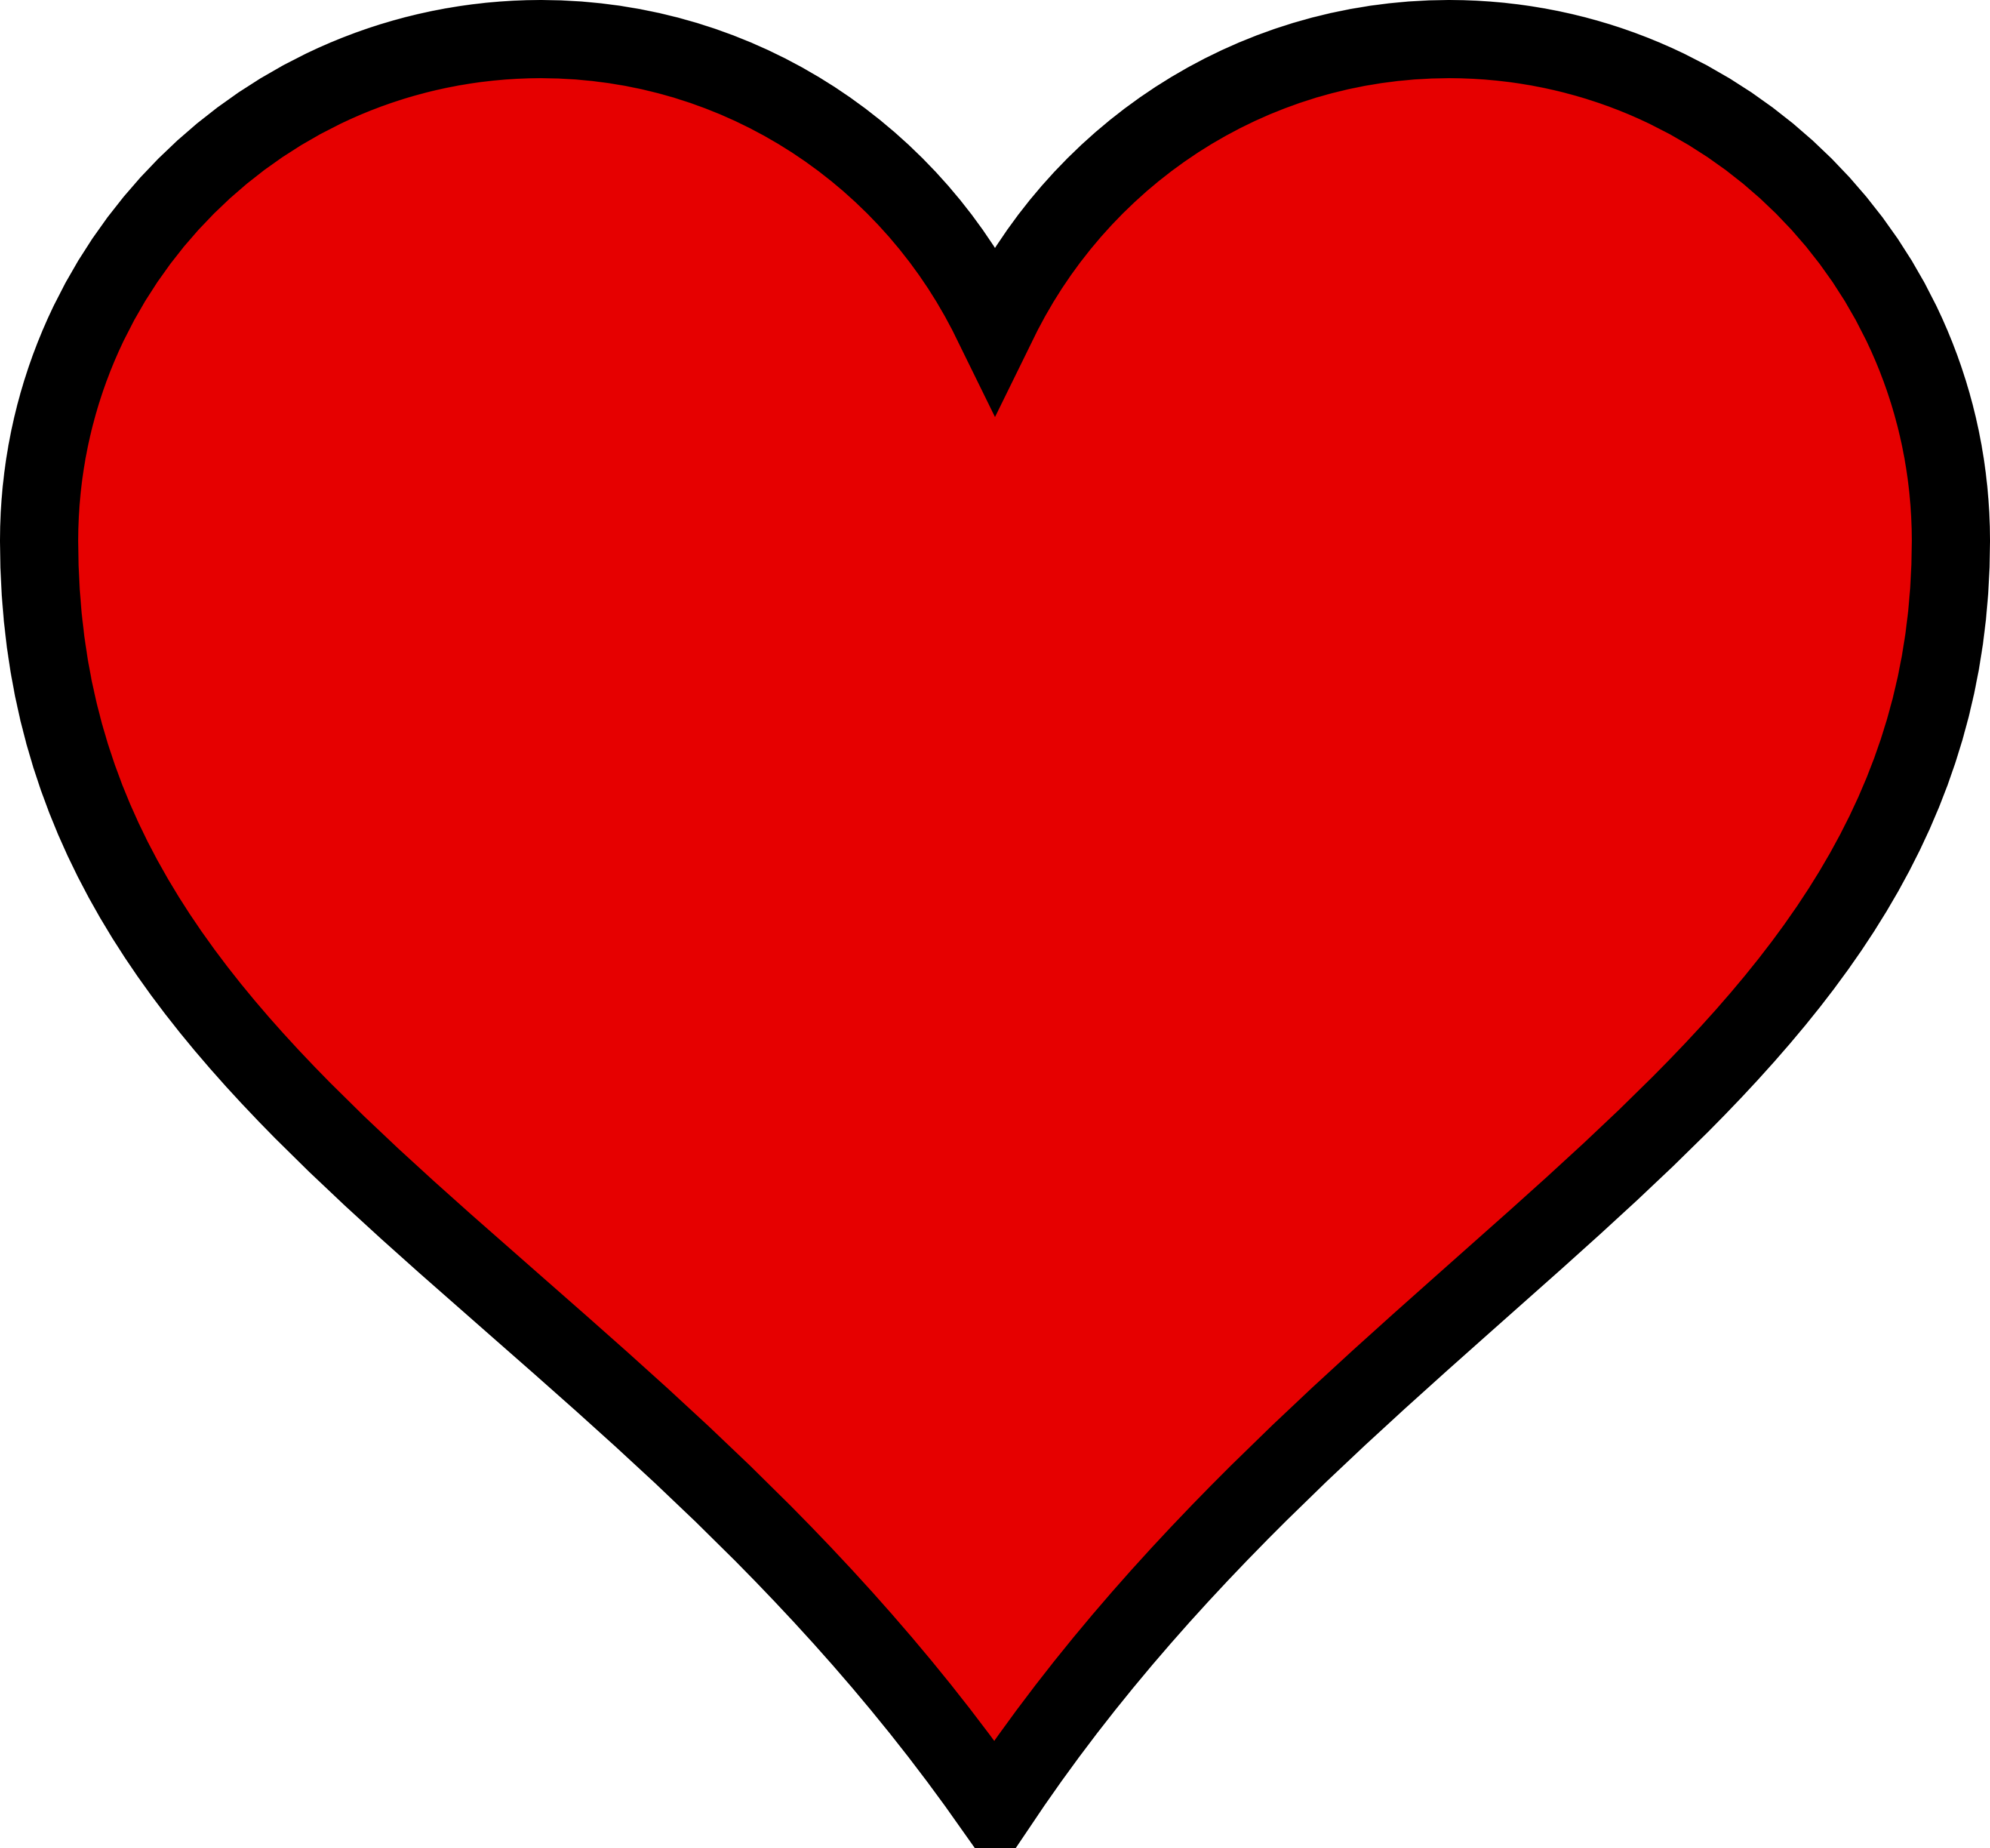 Red Heart Clip Art Clipart Best - Heart, Transparent background PNG HD thumbnail